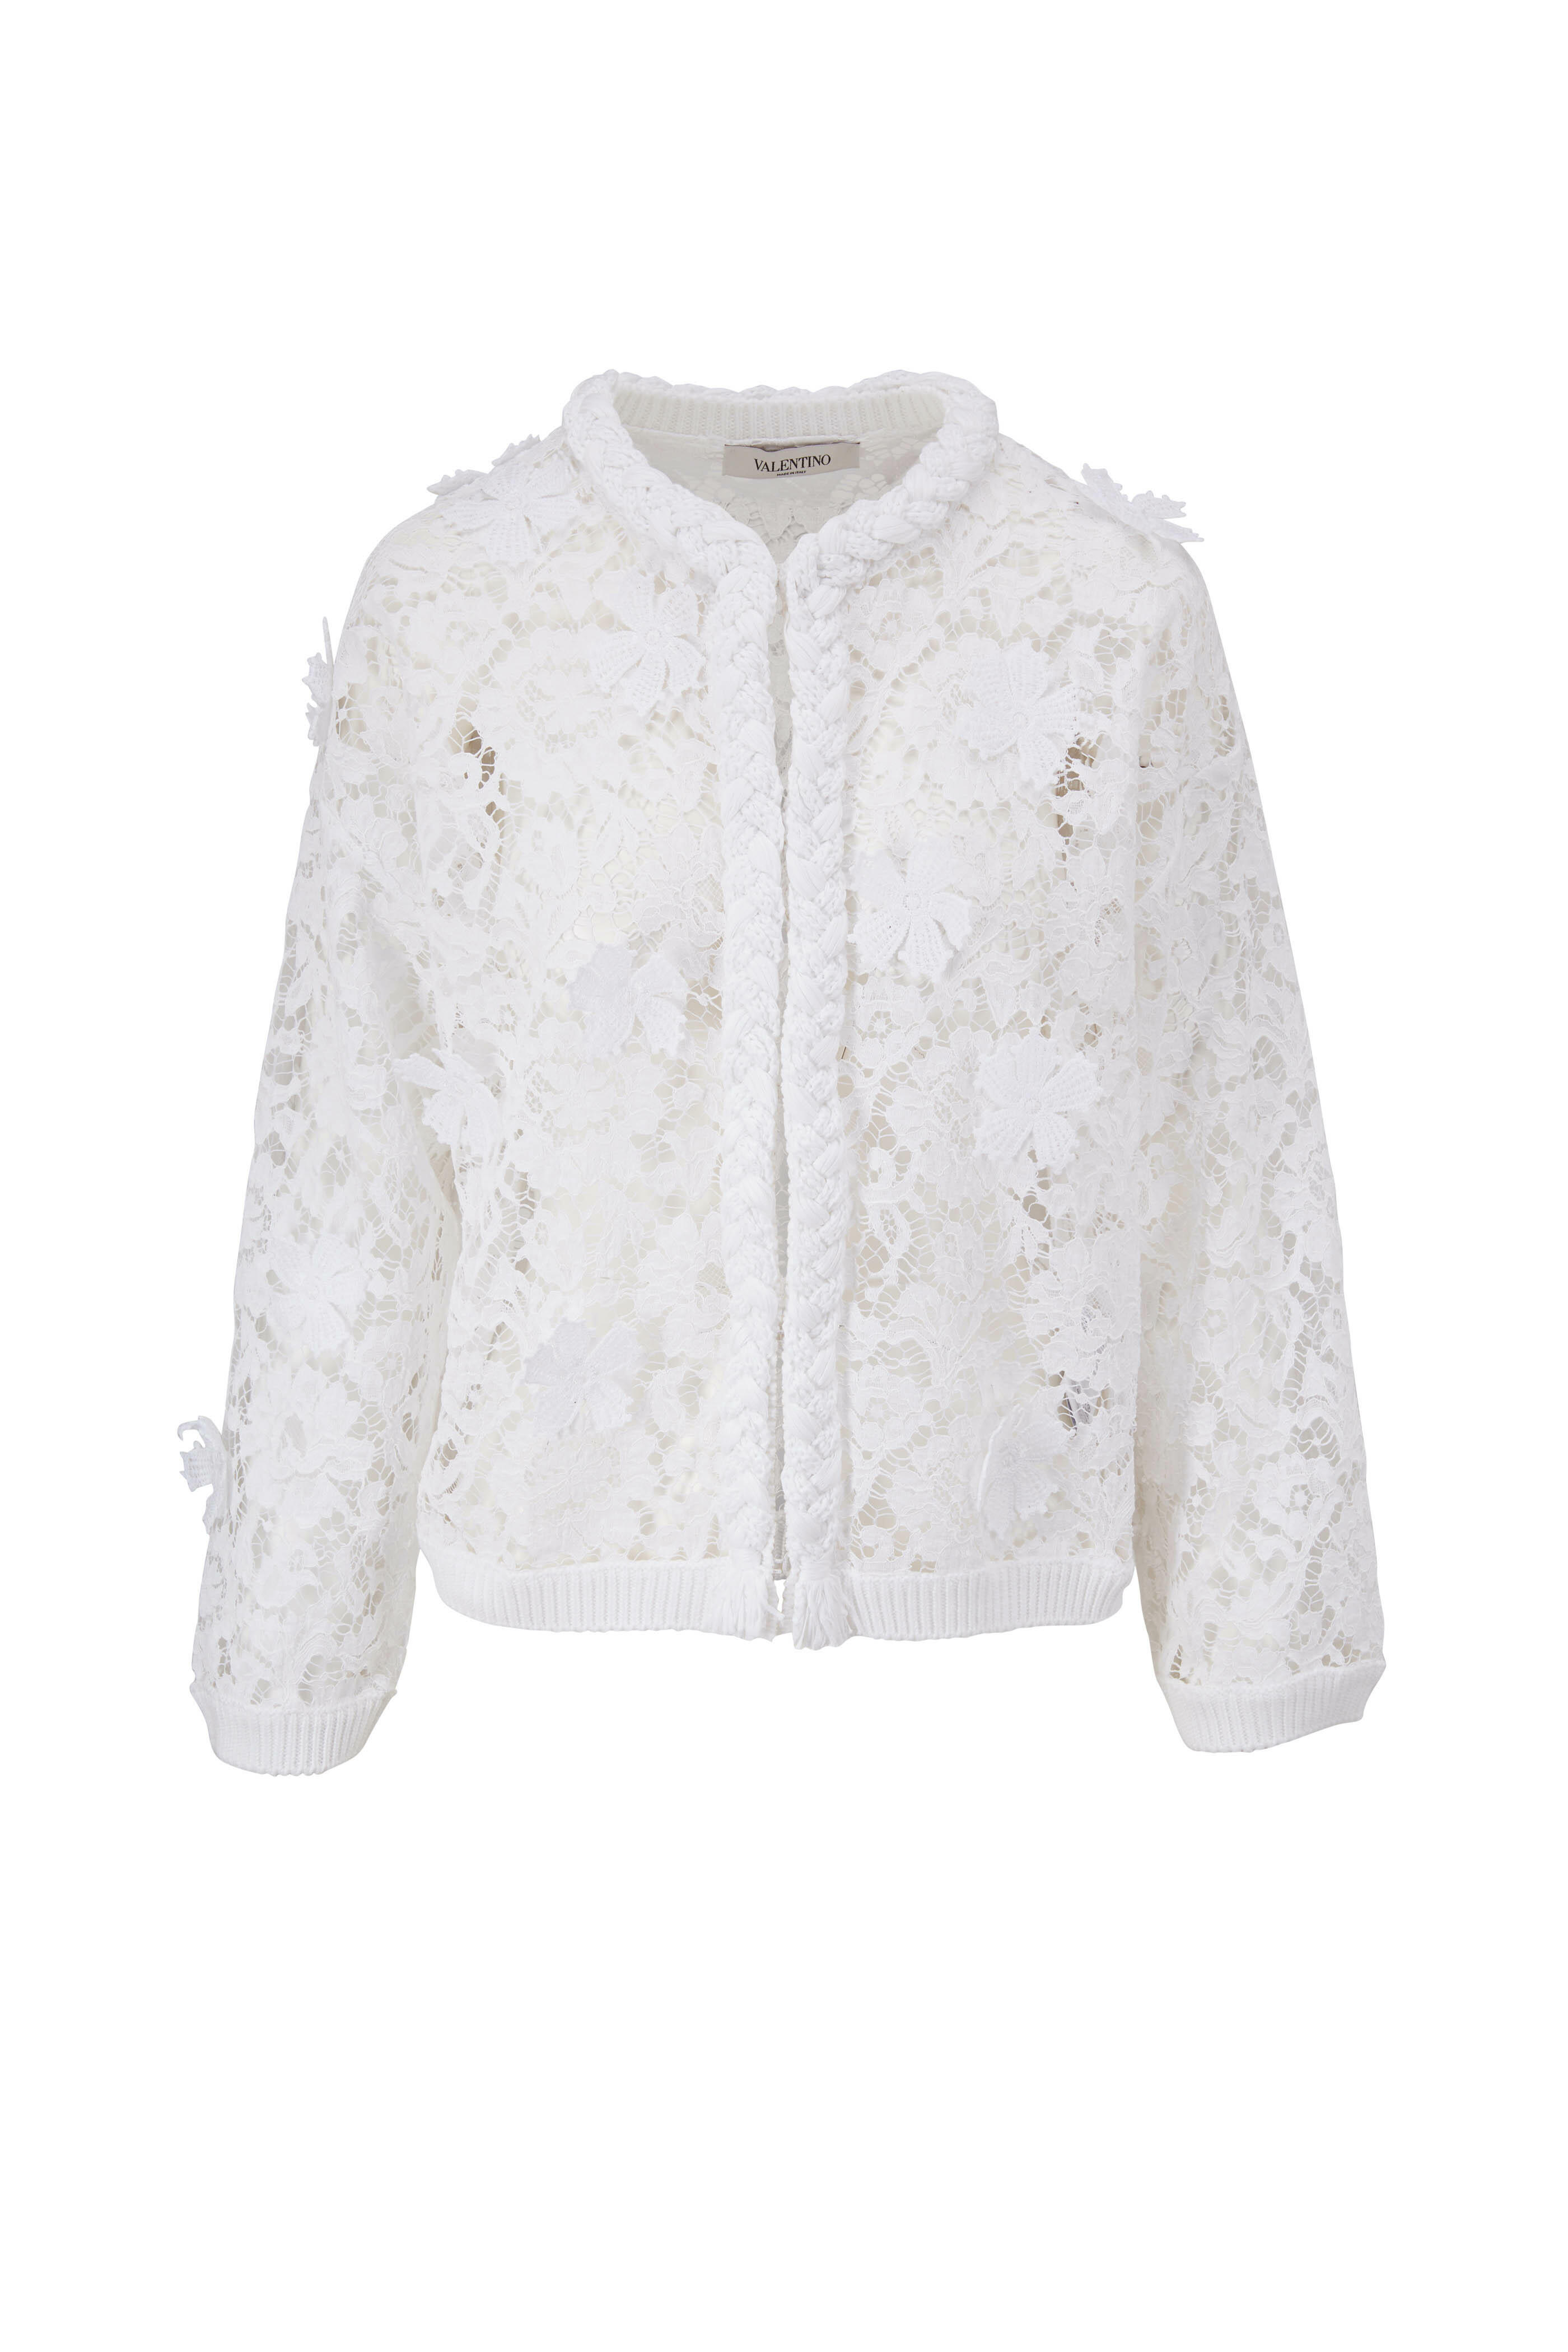 Hofte Skibform om Valentino - White Floral Lace Bomber Jacket | Mitchell Stores